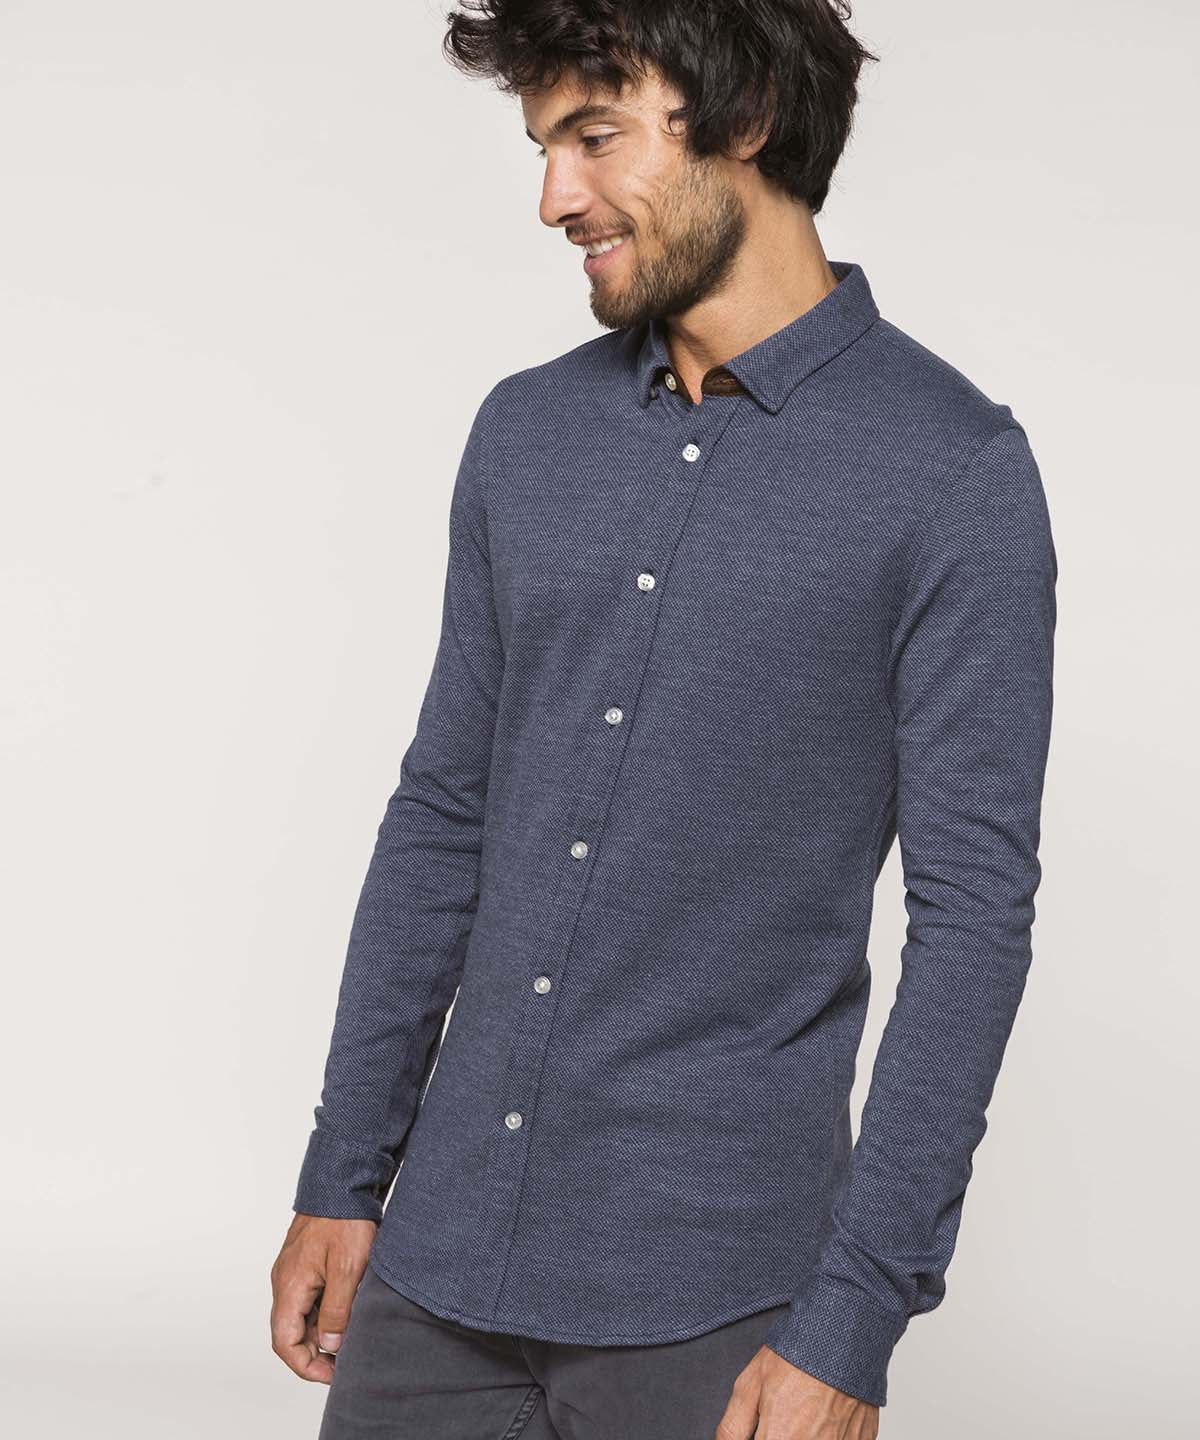 Kariban Long-Sleeved Jacquard Knit Shirt